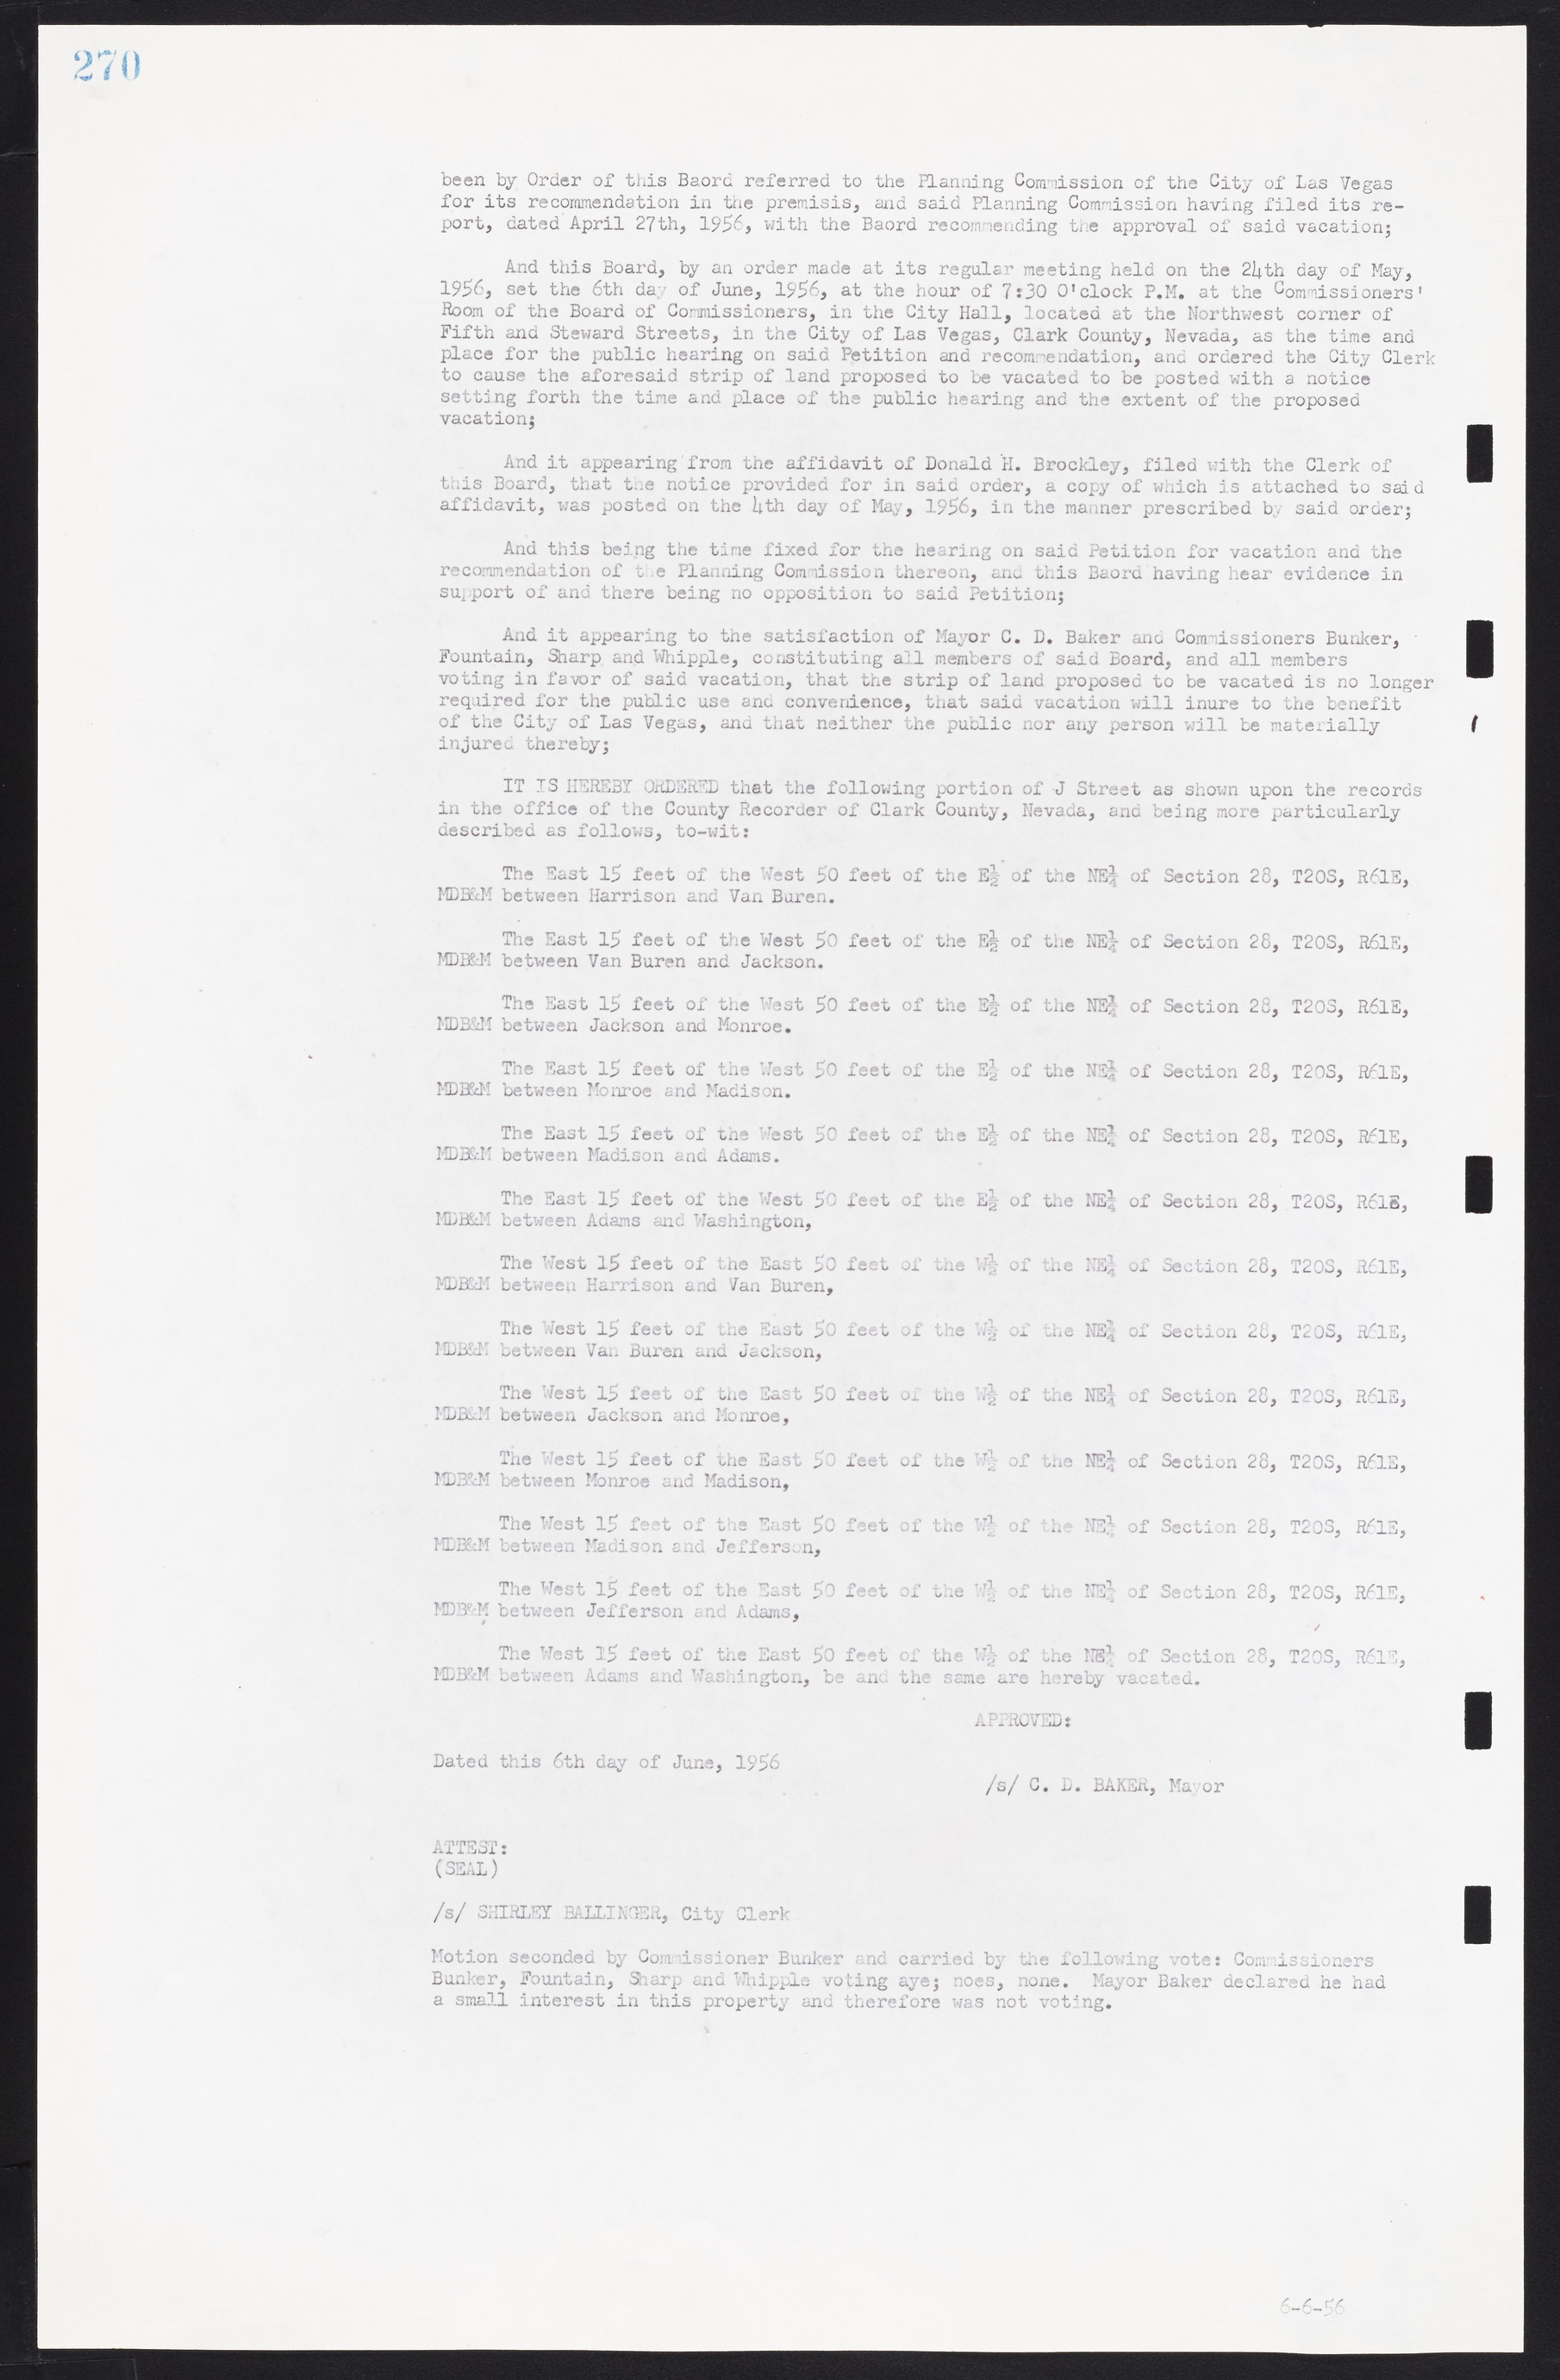 Las Vegas City Commission Minutes, September 21, 1955 to November 20, 1957, lvc000010-290